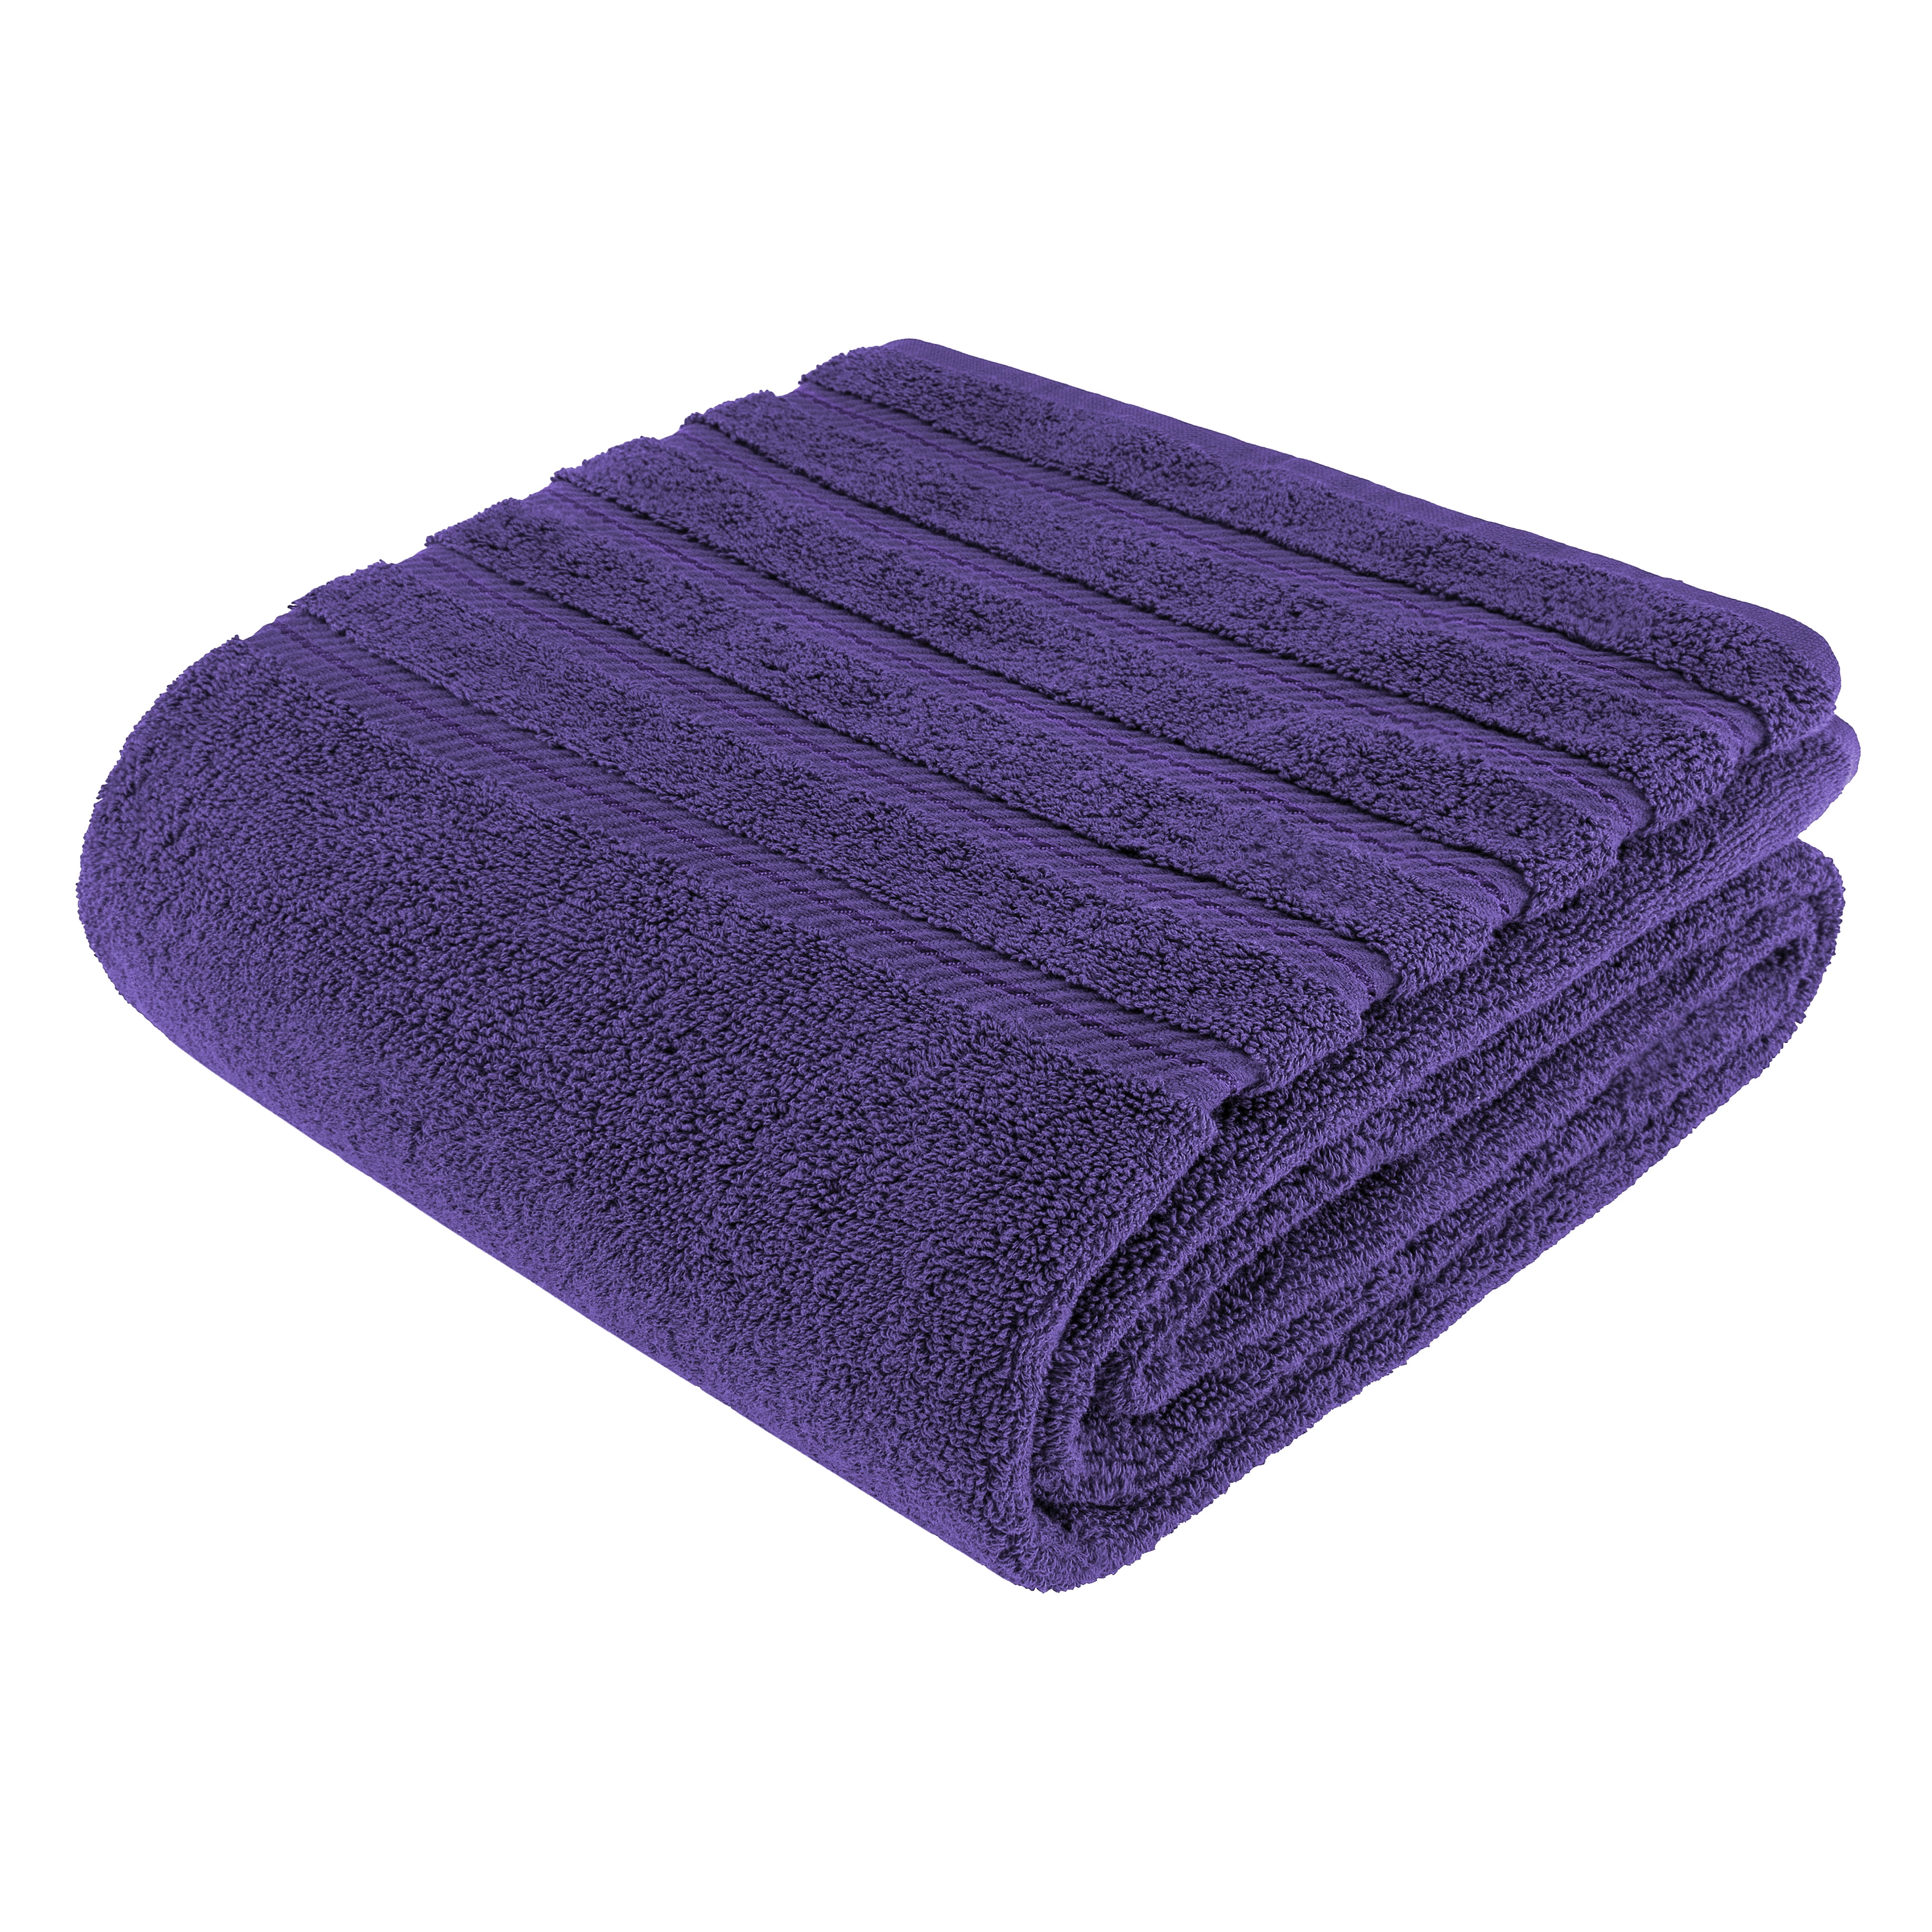 American Soft Linen Bath Towel Set, 4 Piece 100% Turkish Cotton Bath  Towels, 27x54 inches Super Soft Towels for Bathroom, Purple  Edis4BathYelE133 - The Home Depot